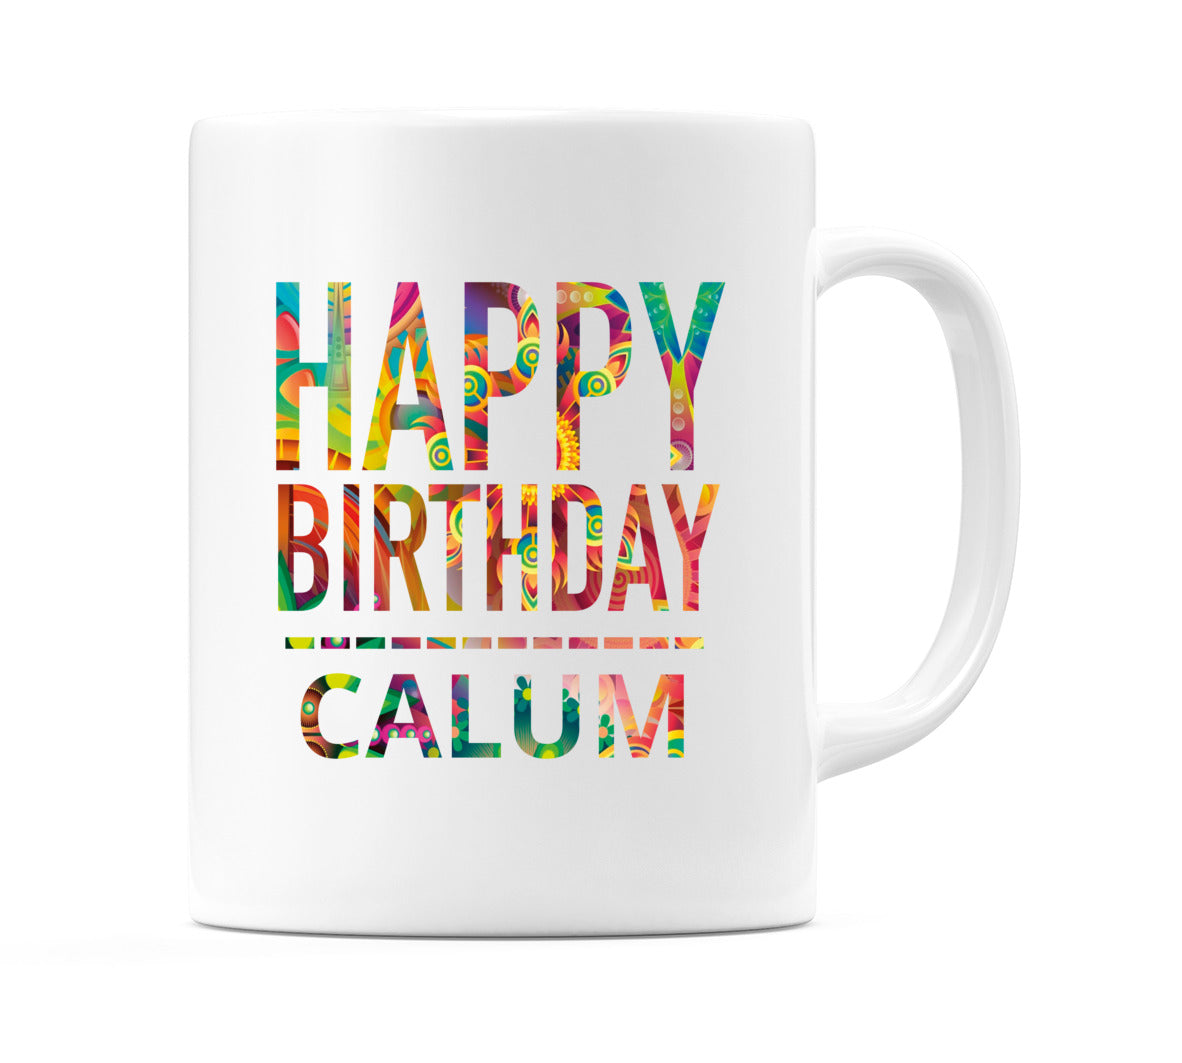 Happy Birthday Calum (Tie Dye Effect) Mug Cup by WeDoMugs